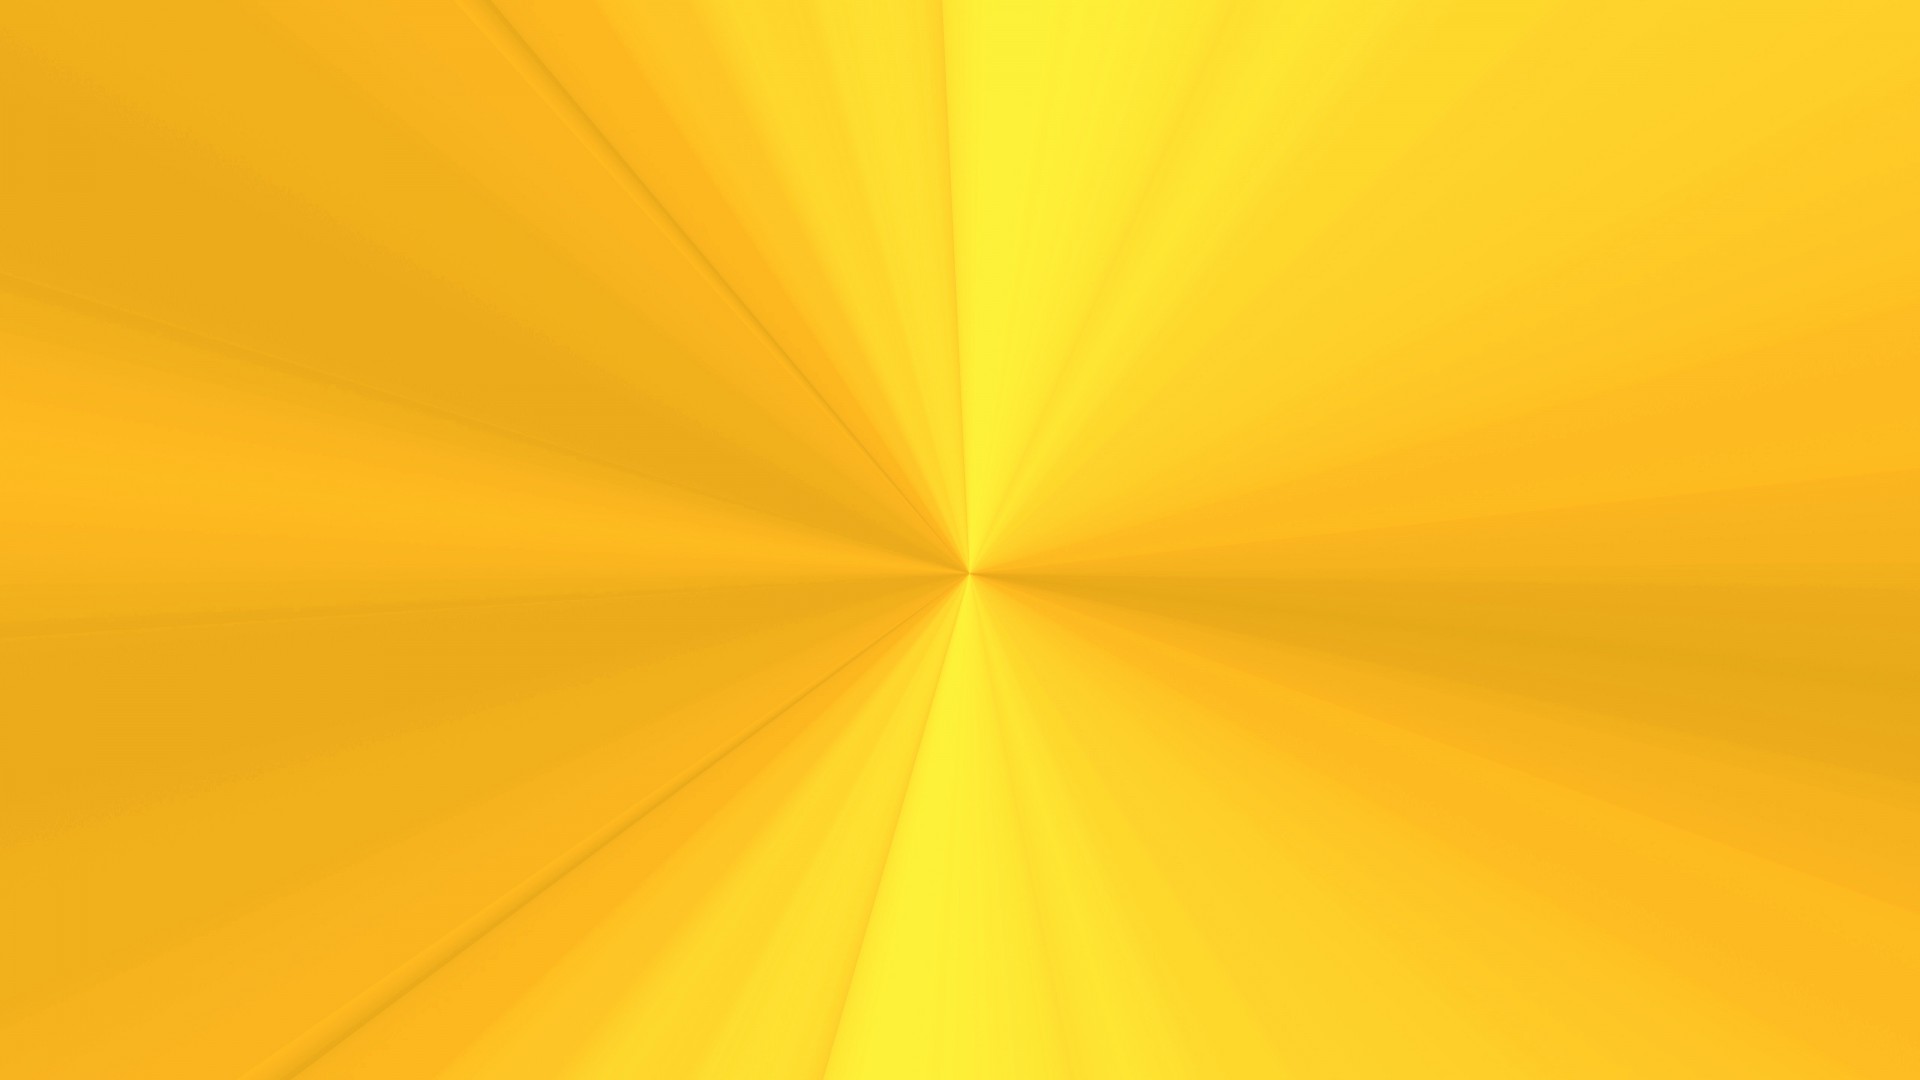 Hq Yellow Wallpapers Poze Cu Fundal Galben 255589 Hd